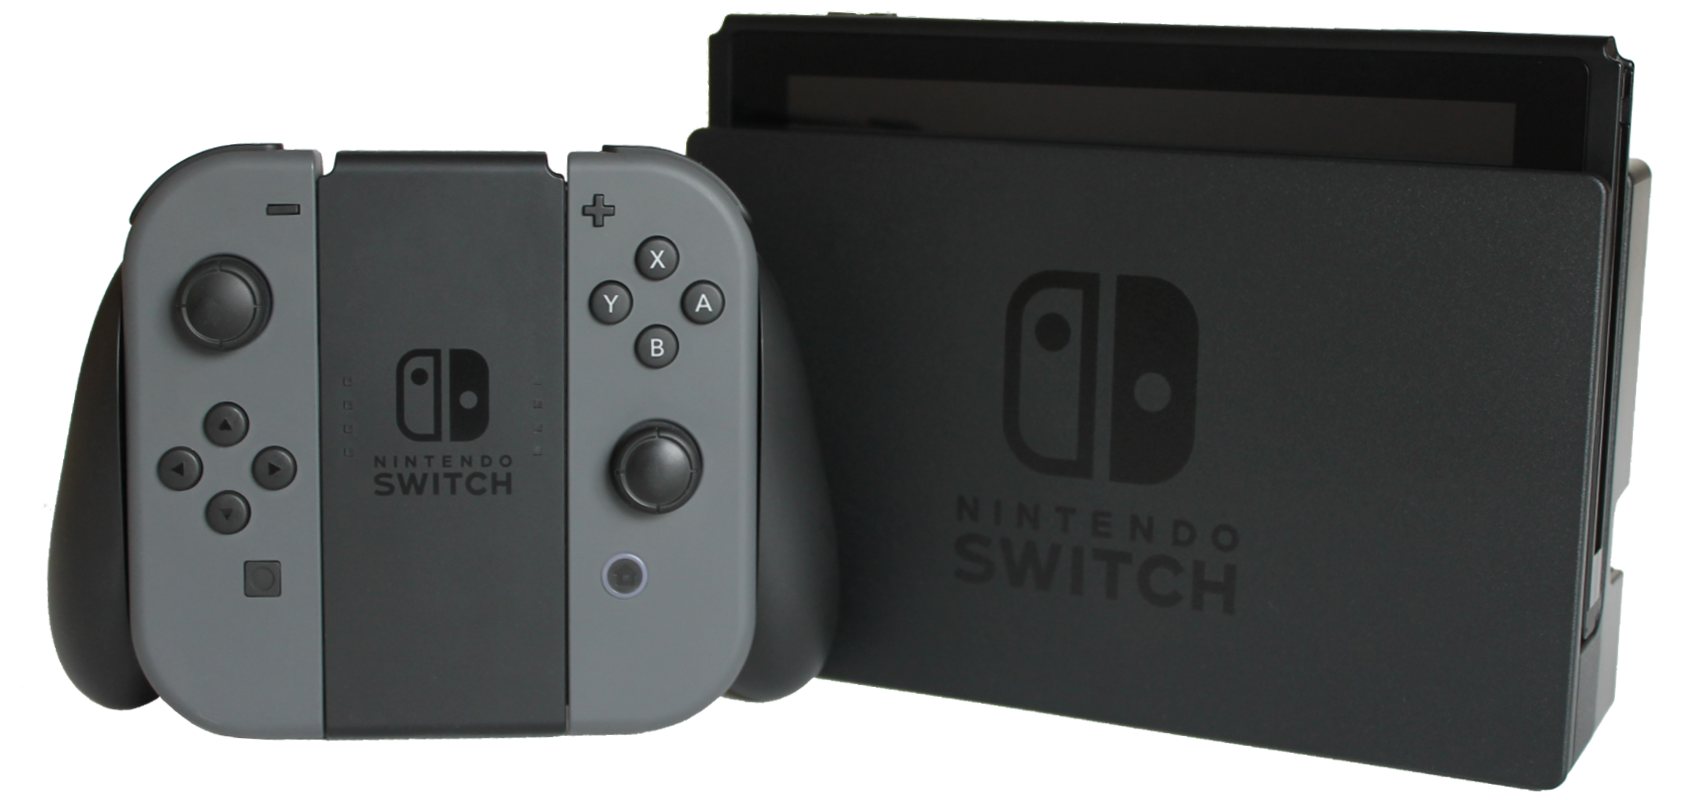 Nintendo Switch PNG Free Image